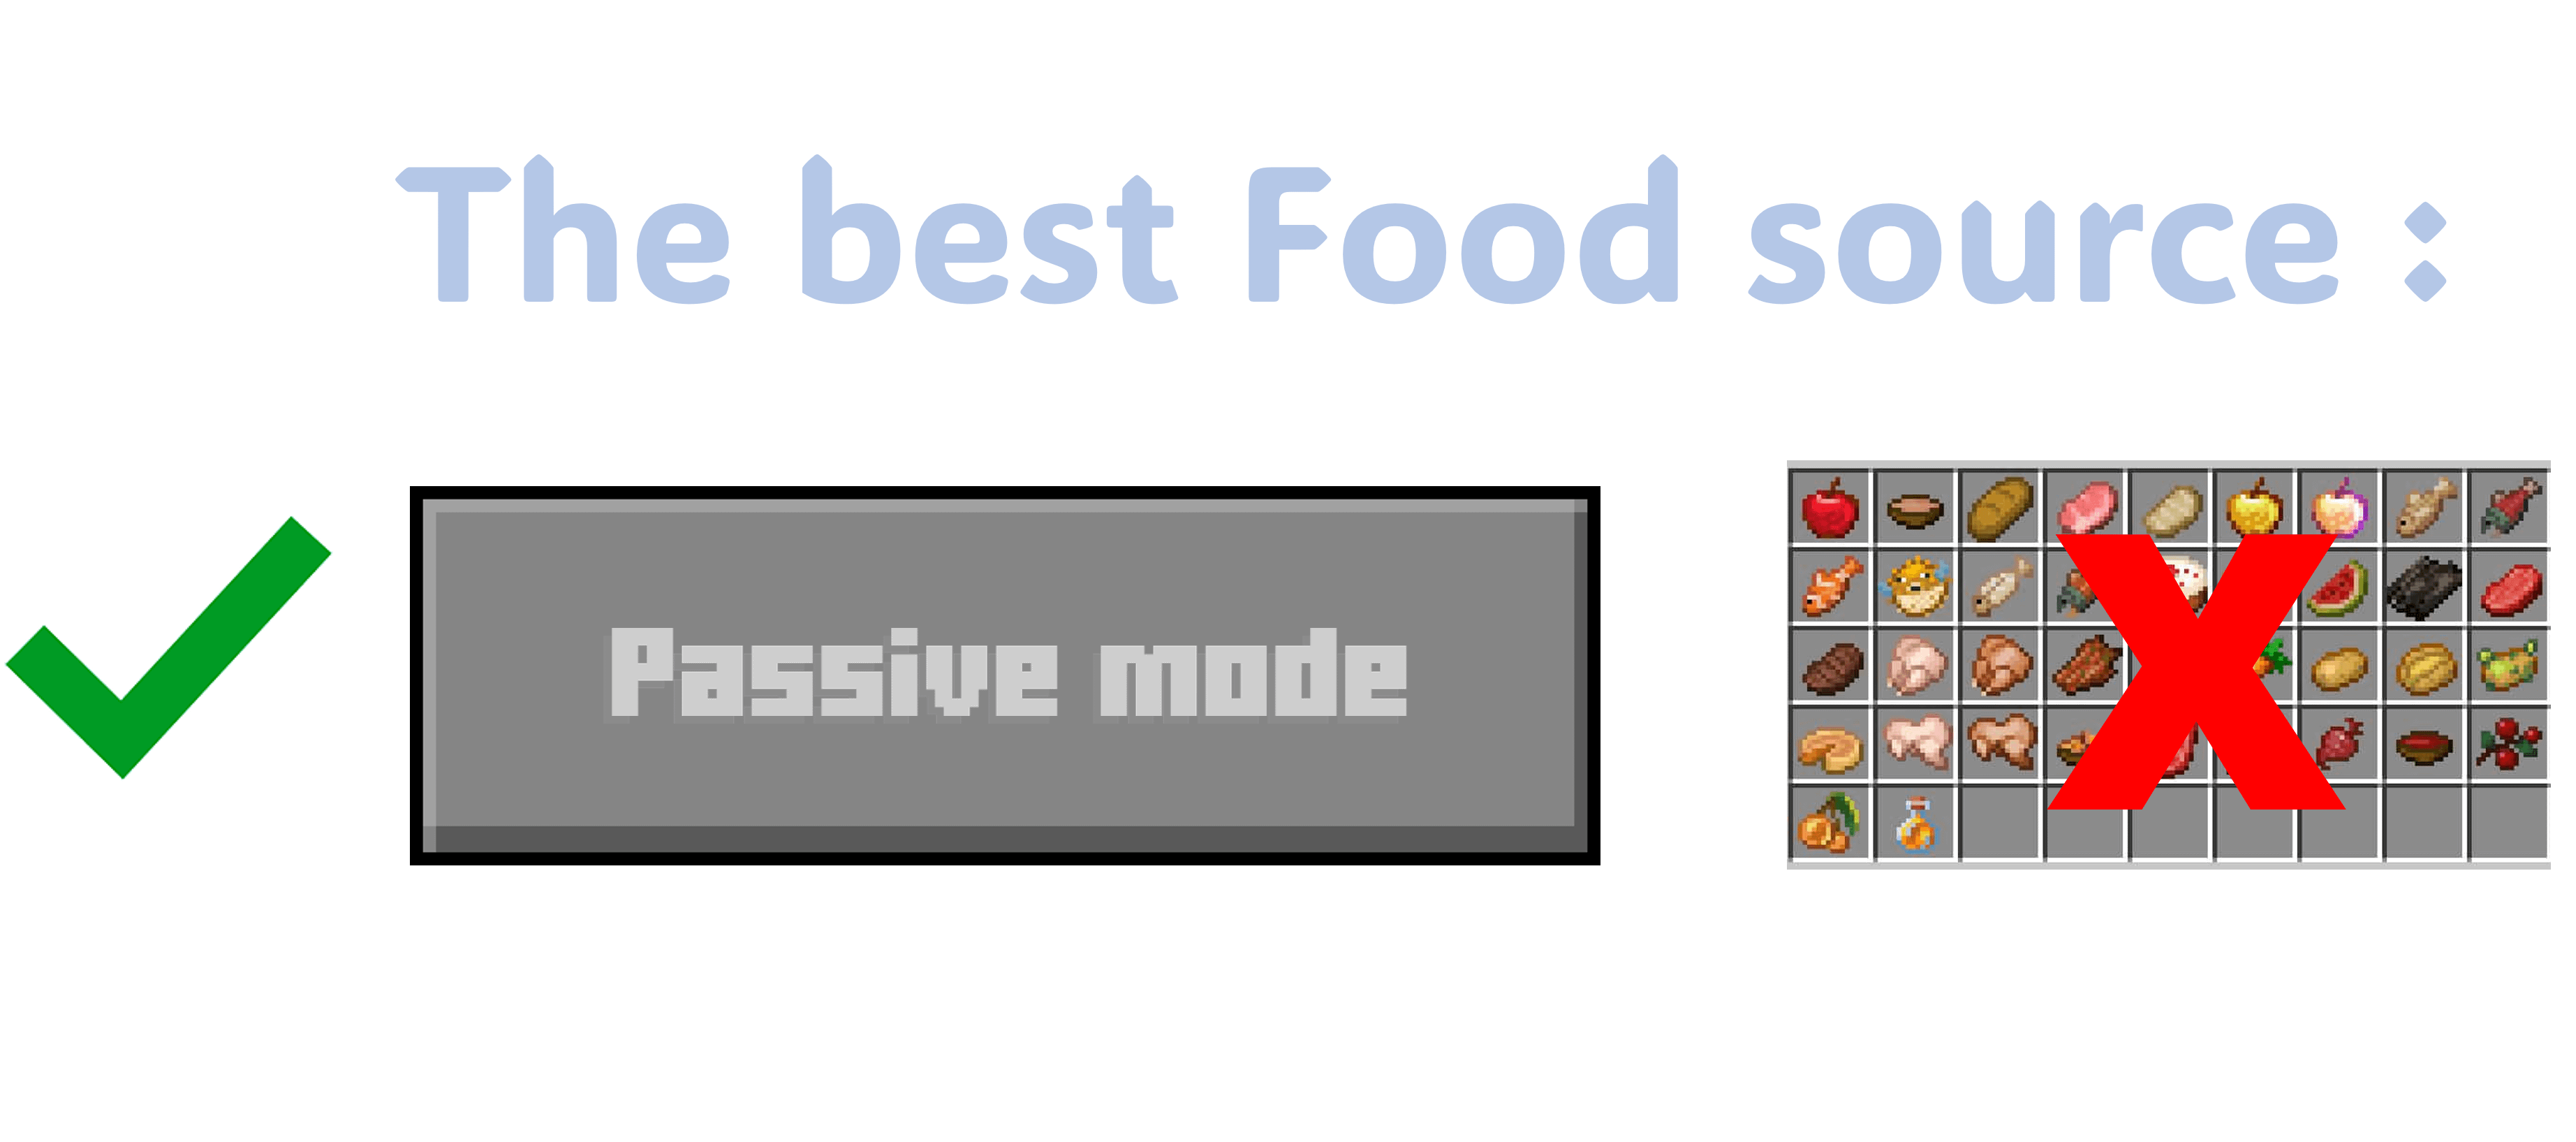 Minecraft Memes - "Ultimate food source"